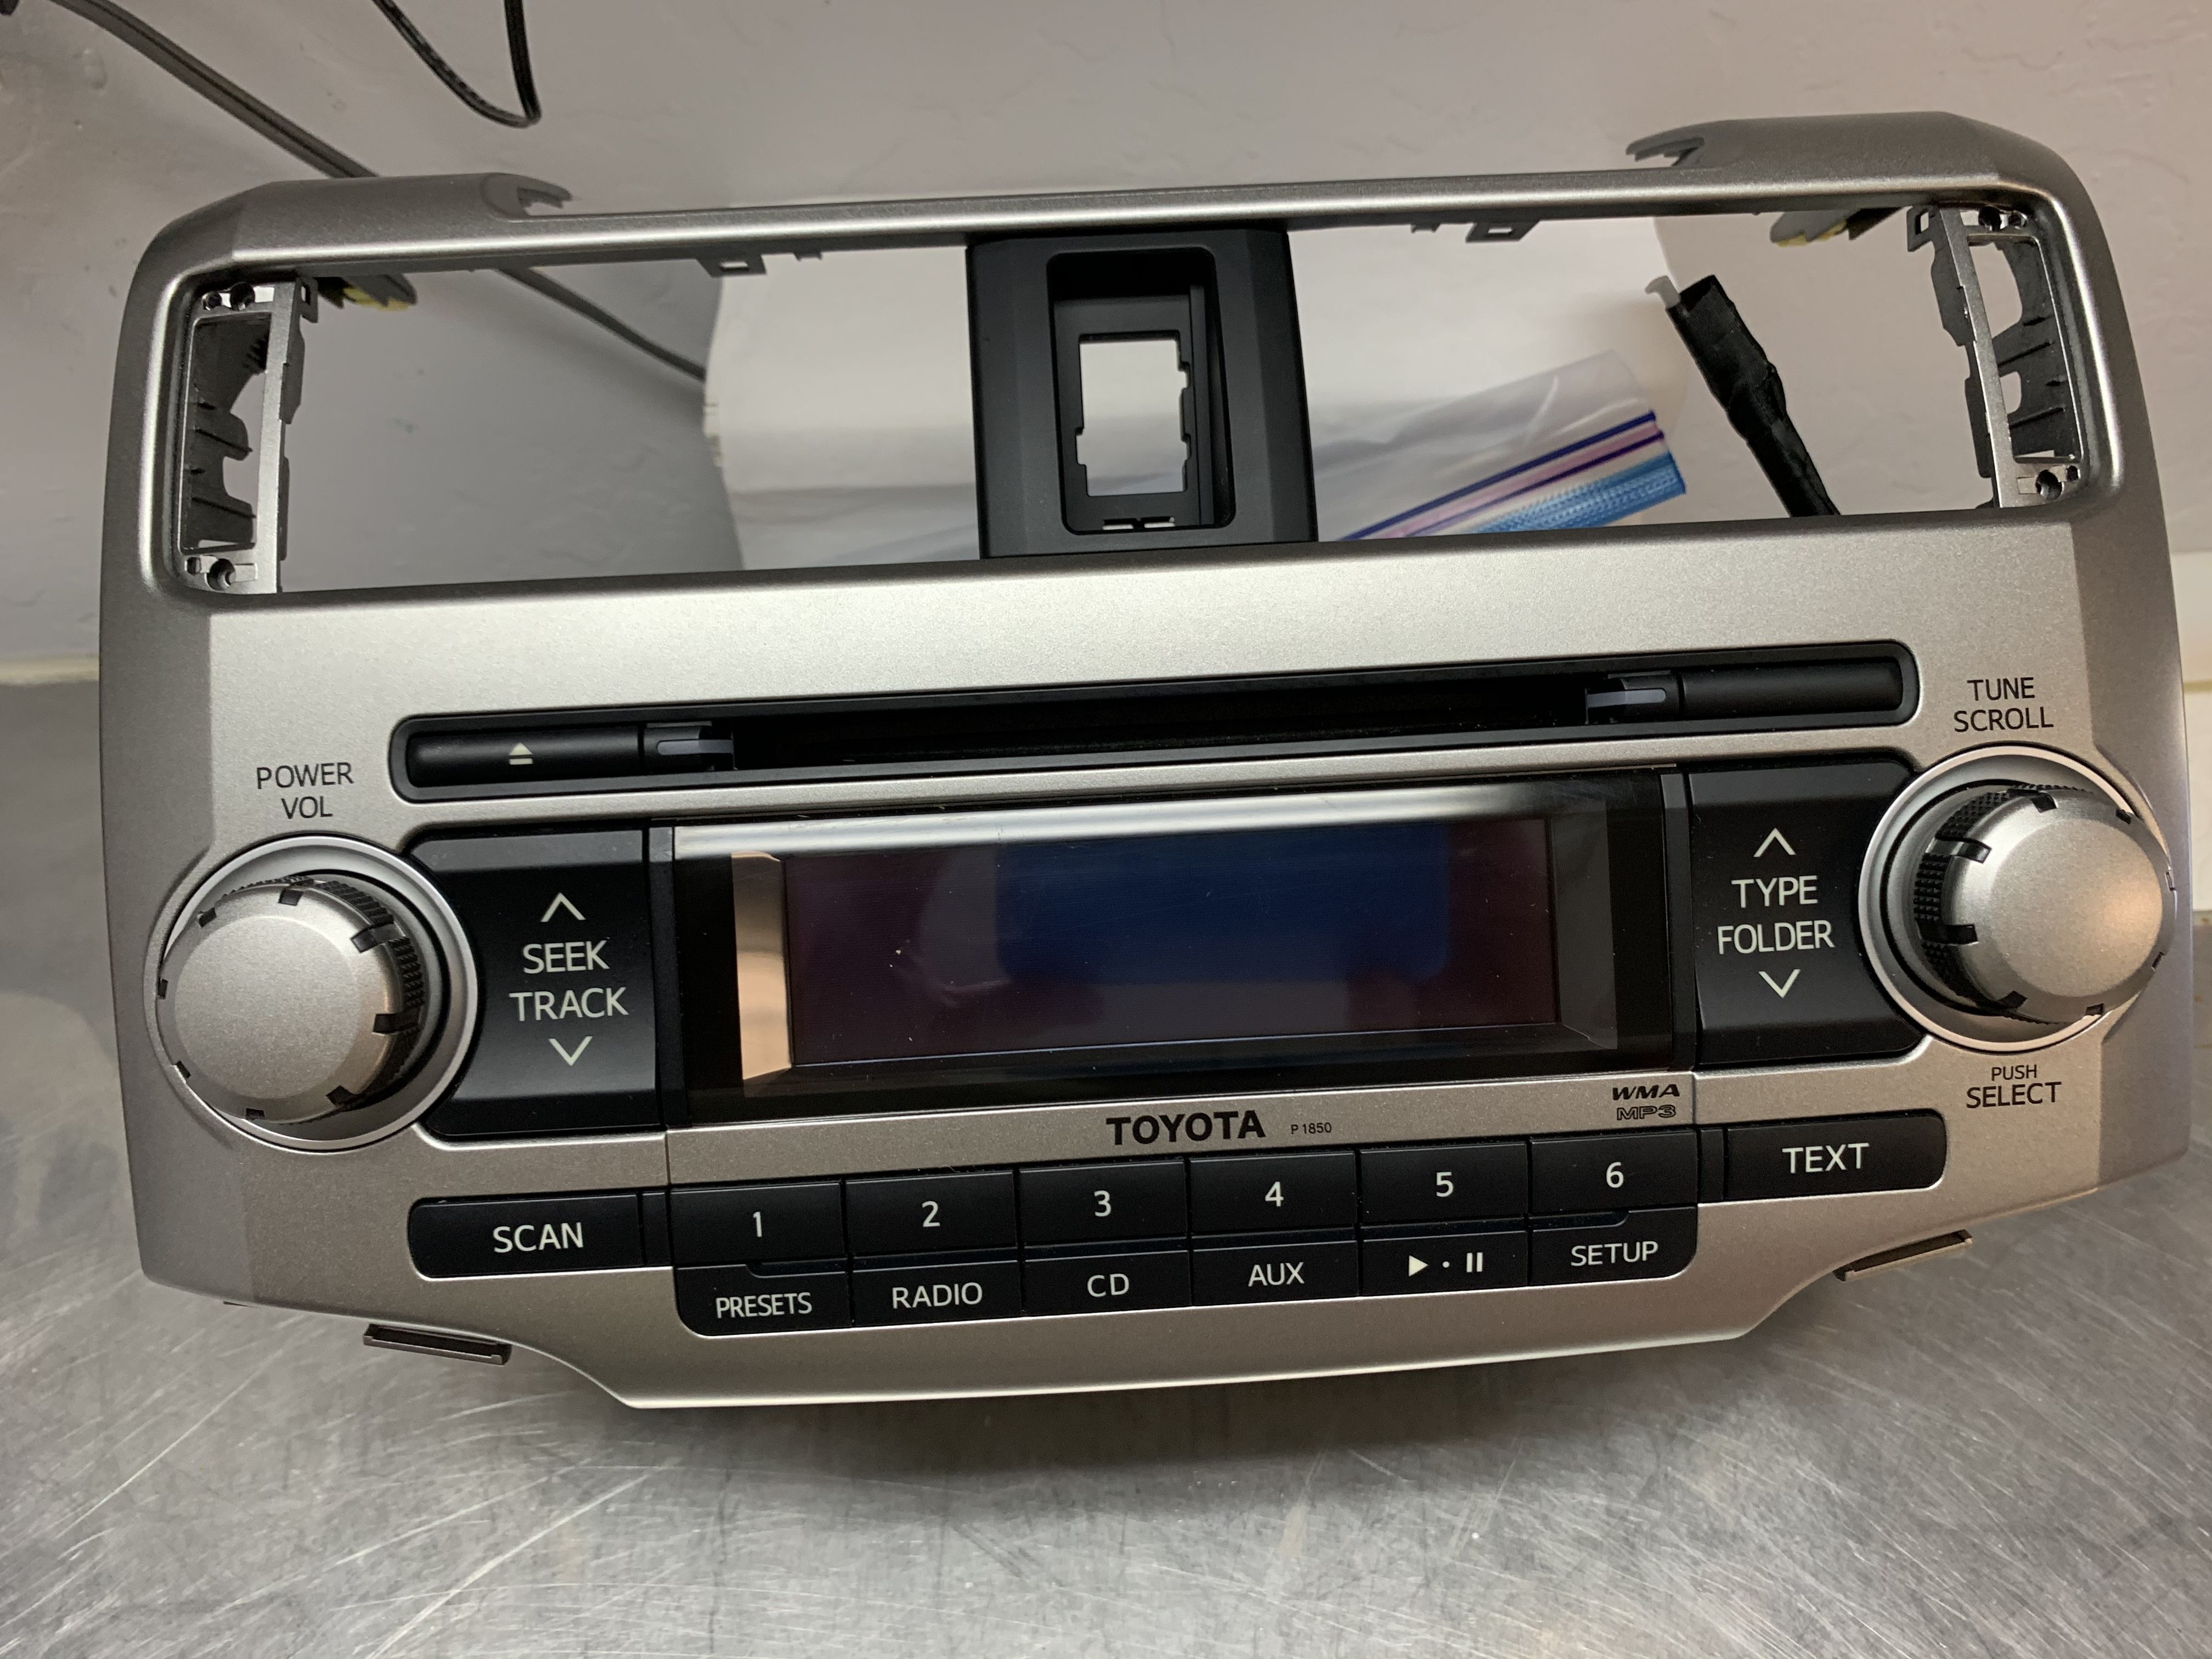 Toyota 4 runner OEM Car Radio Receiver Manufacturer Part Number: 86120-35490 Color: Silver Black Brand: Toyota